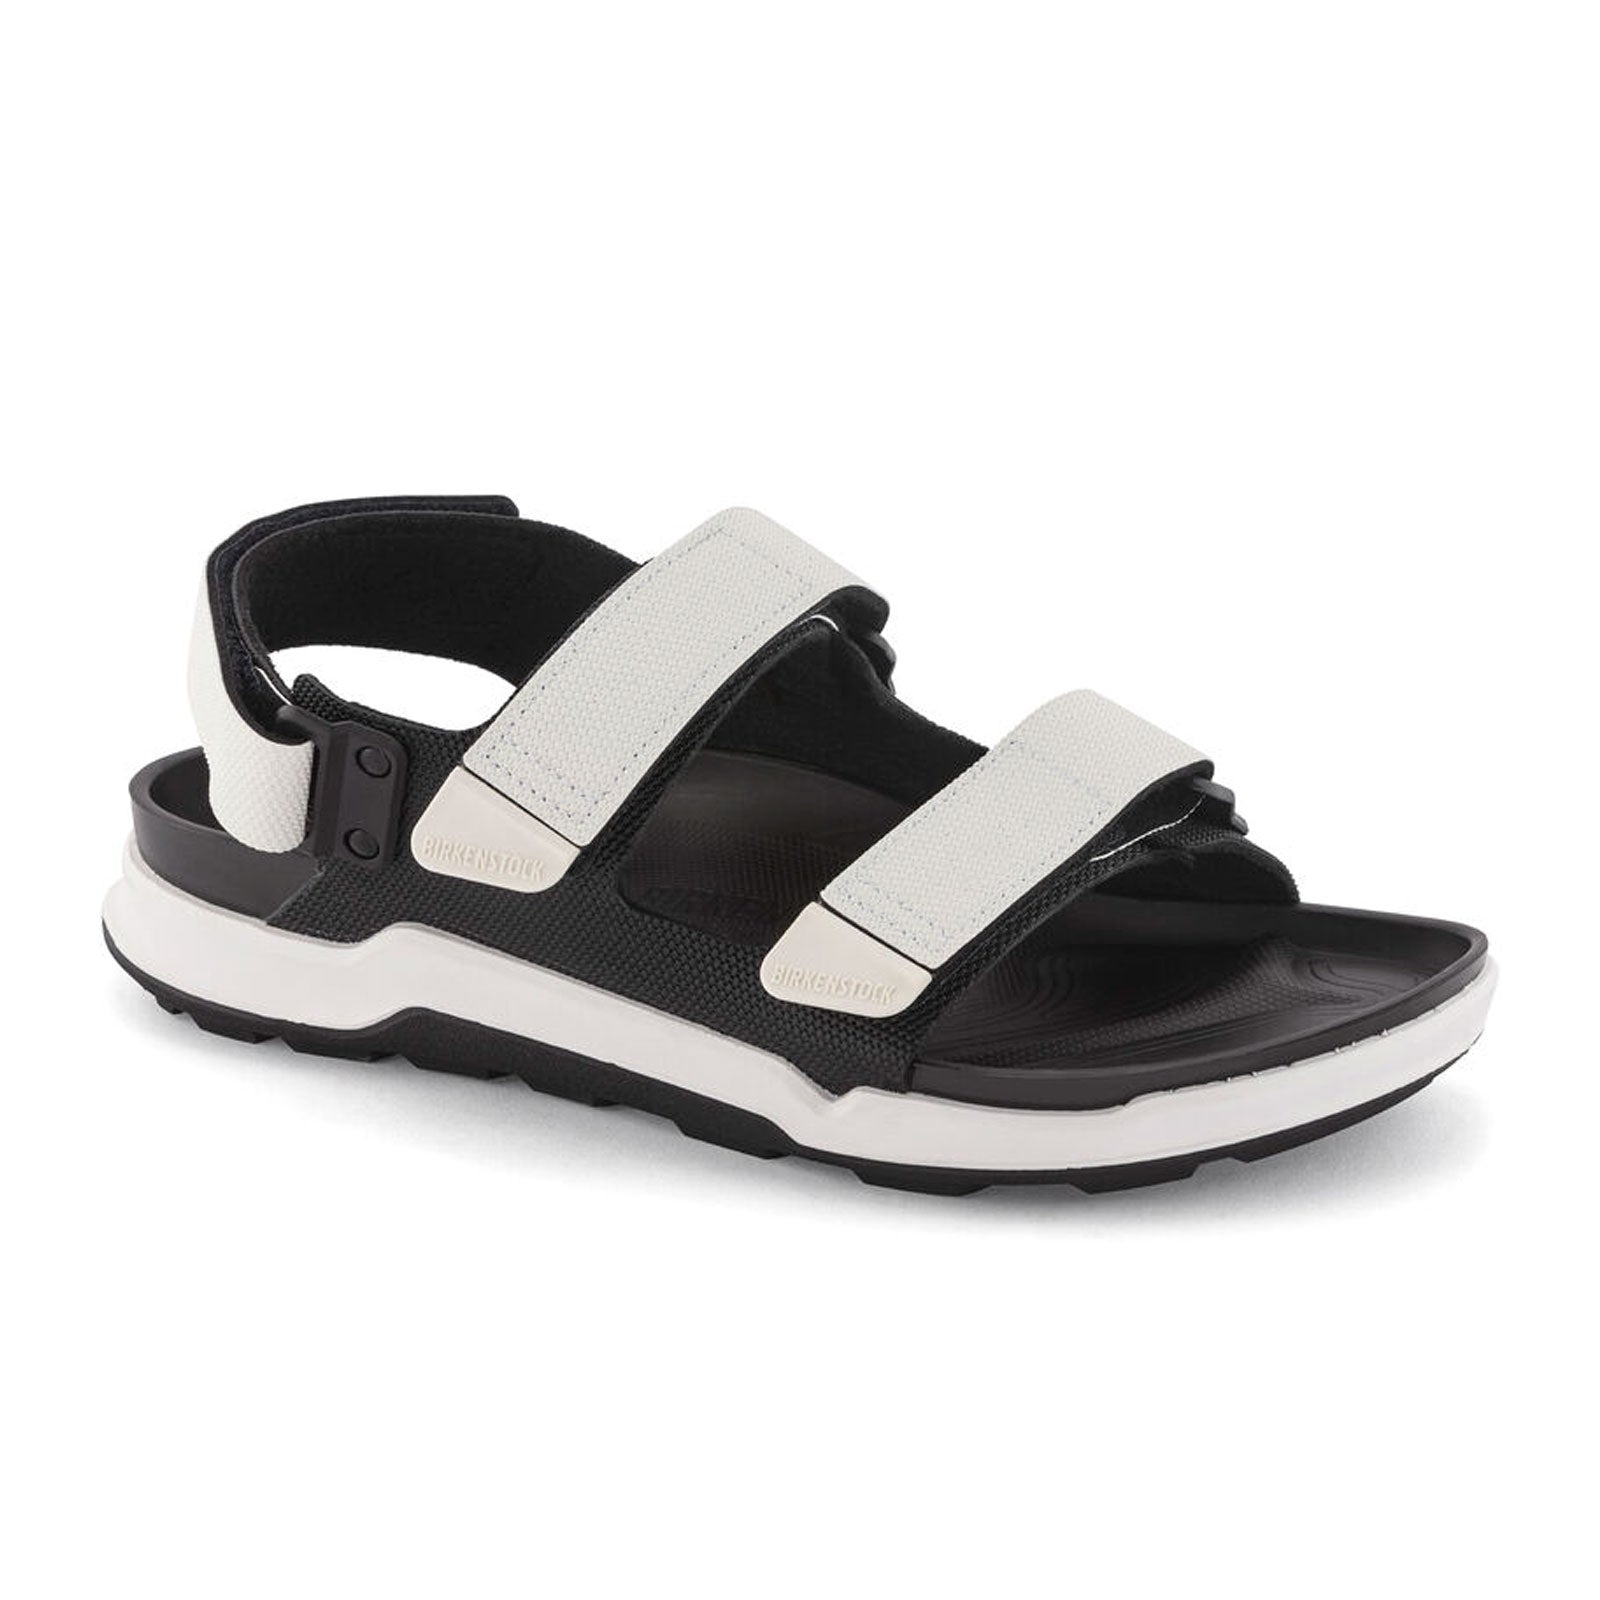 Birkenstock, Birkenstock Tatacoa CE Birko-Flor Active Sandal (Uomo) - Futura Nero/Bianco